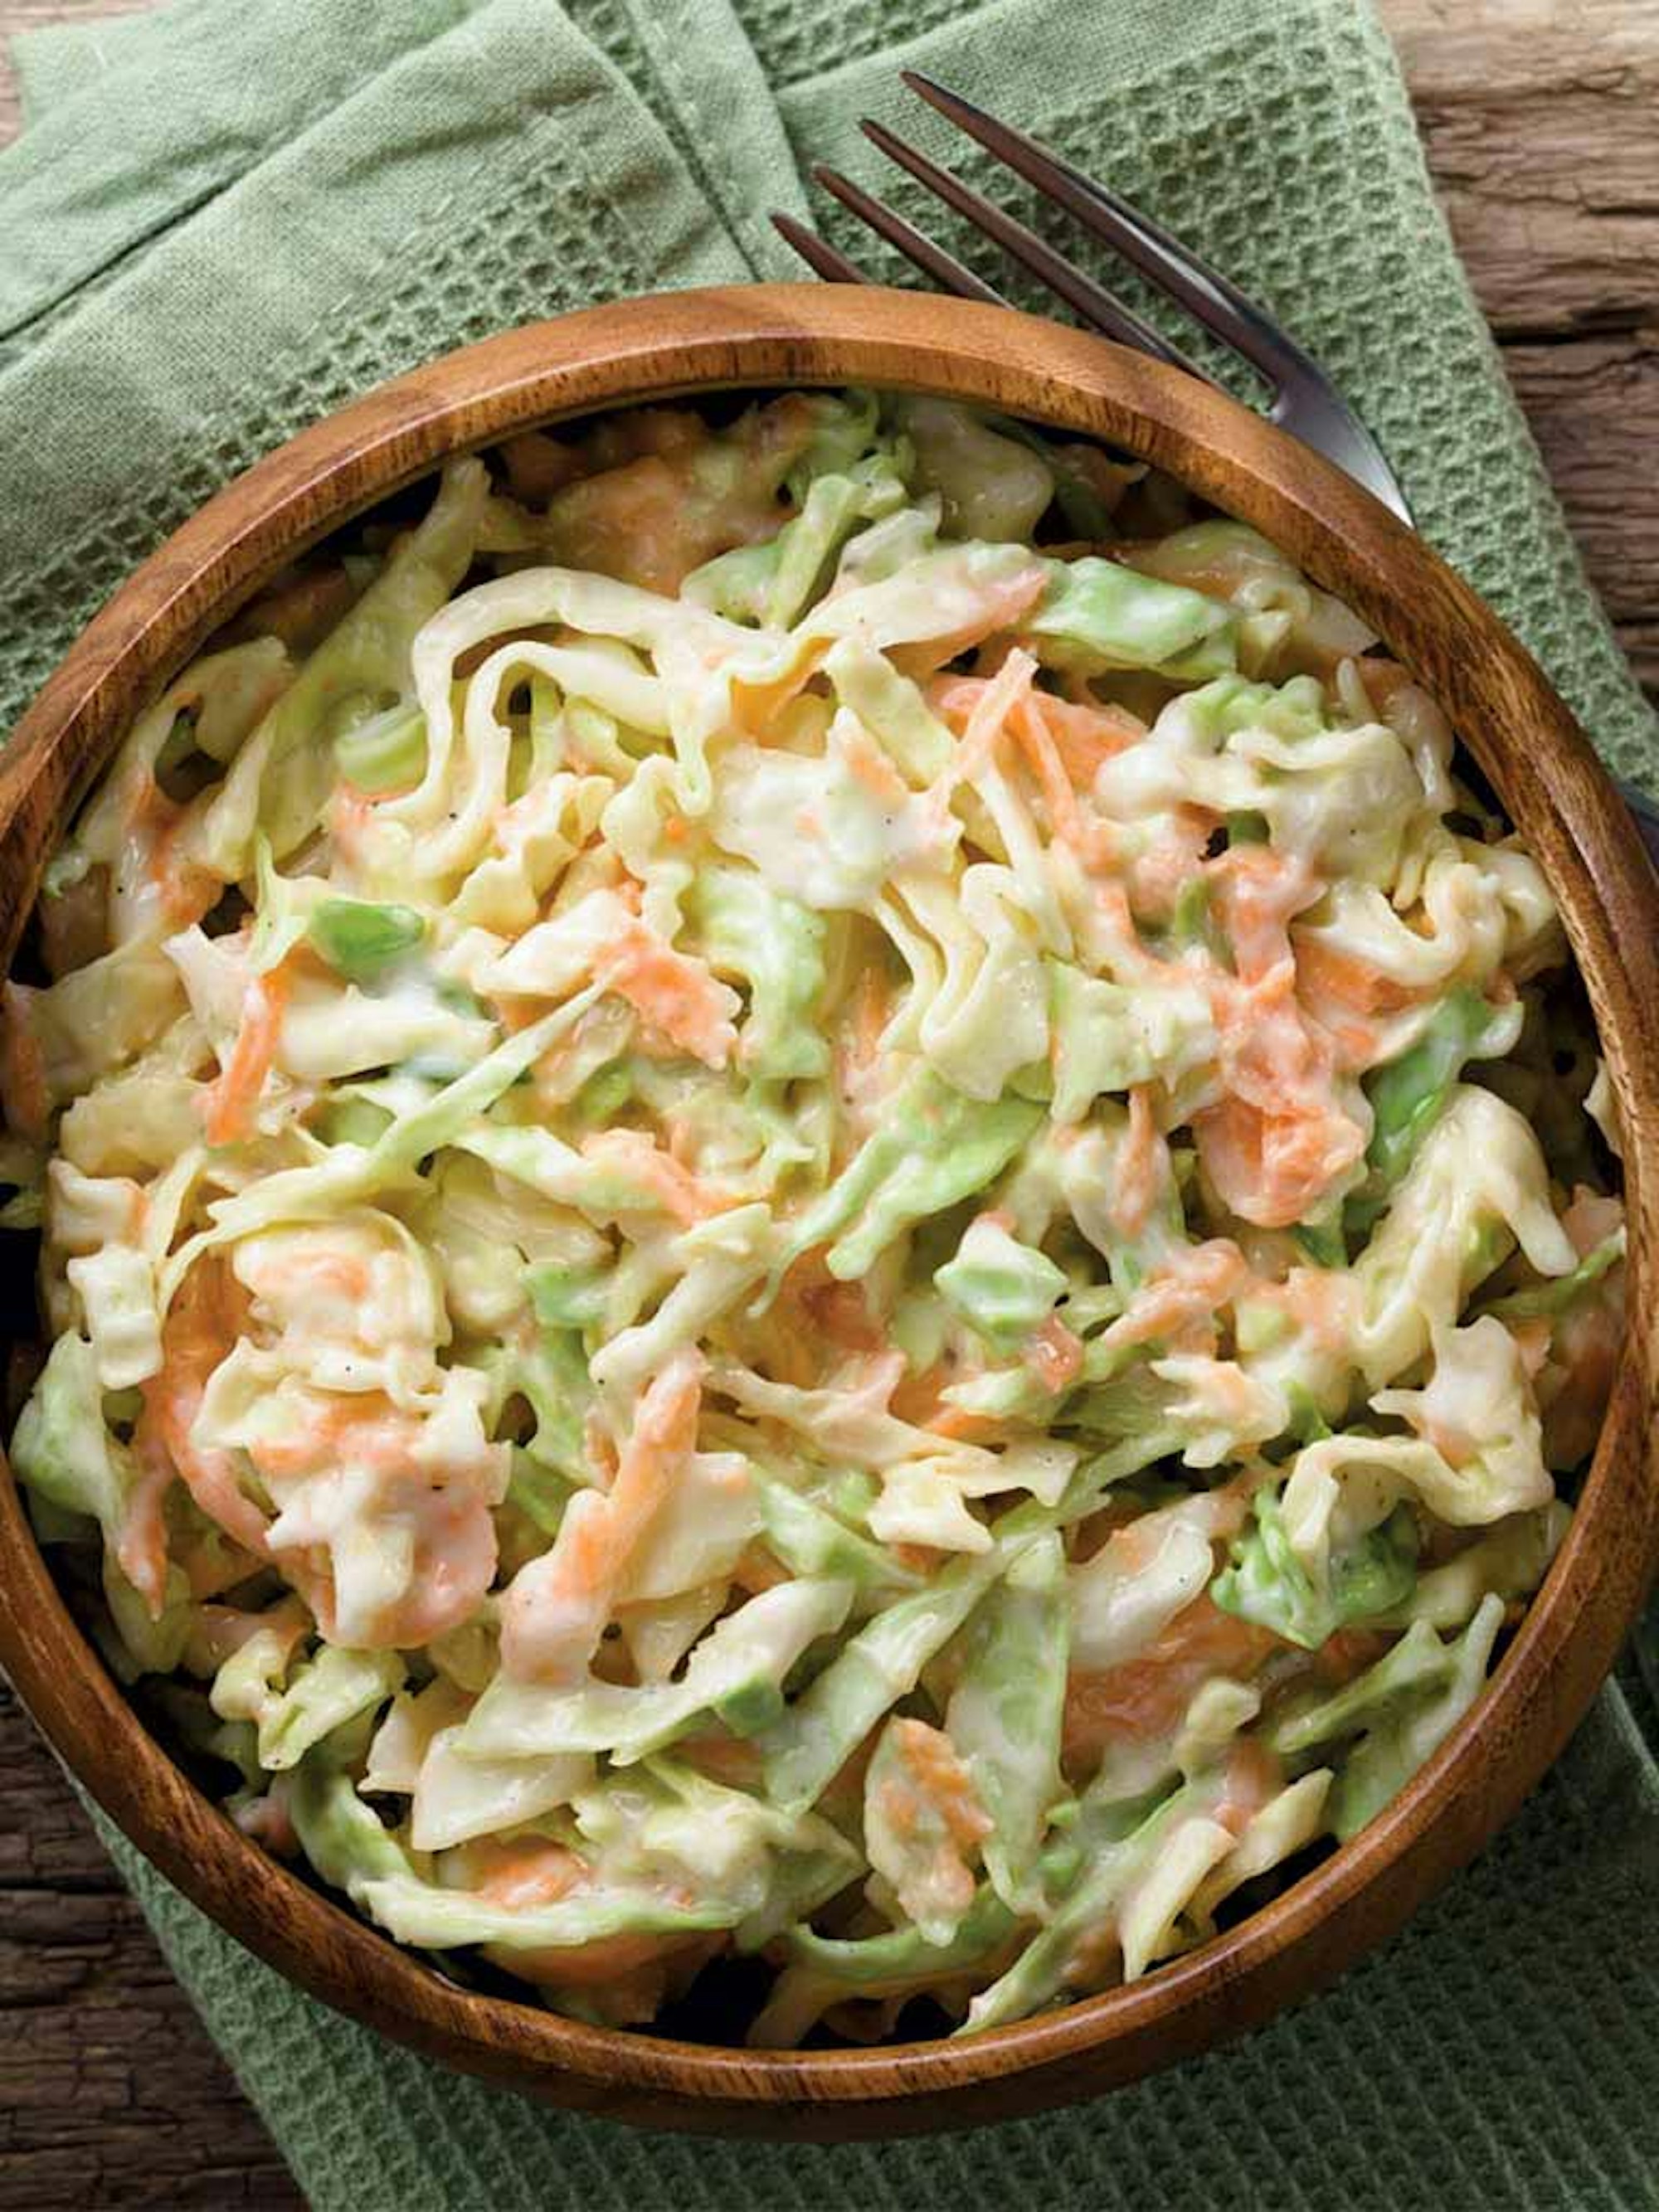 Food Processor Coleslaw Salad recipe | Robins Kitchen blog